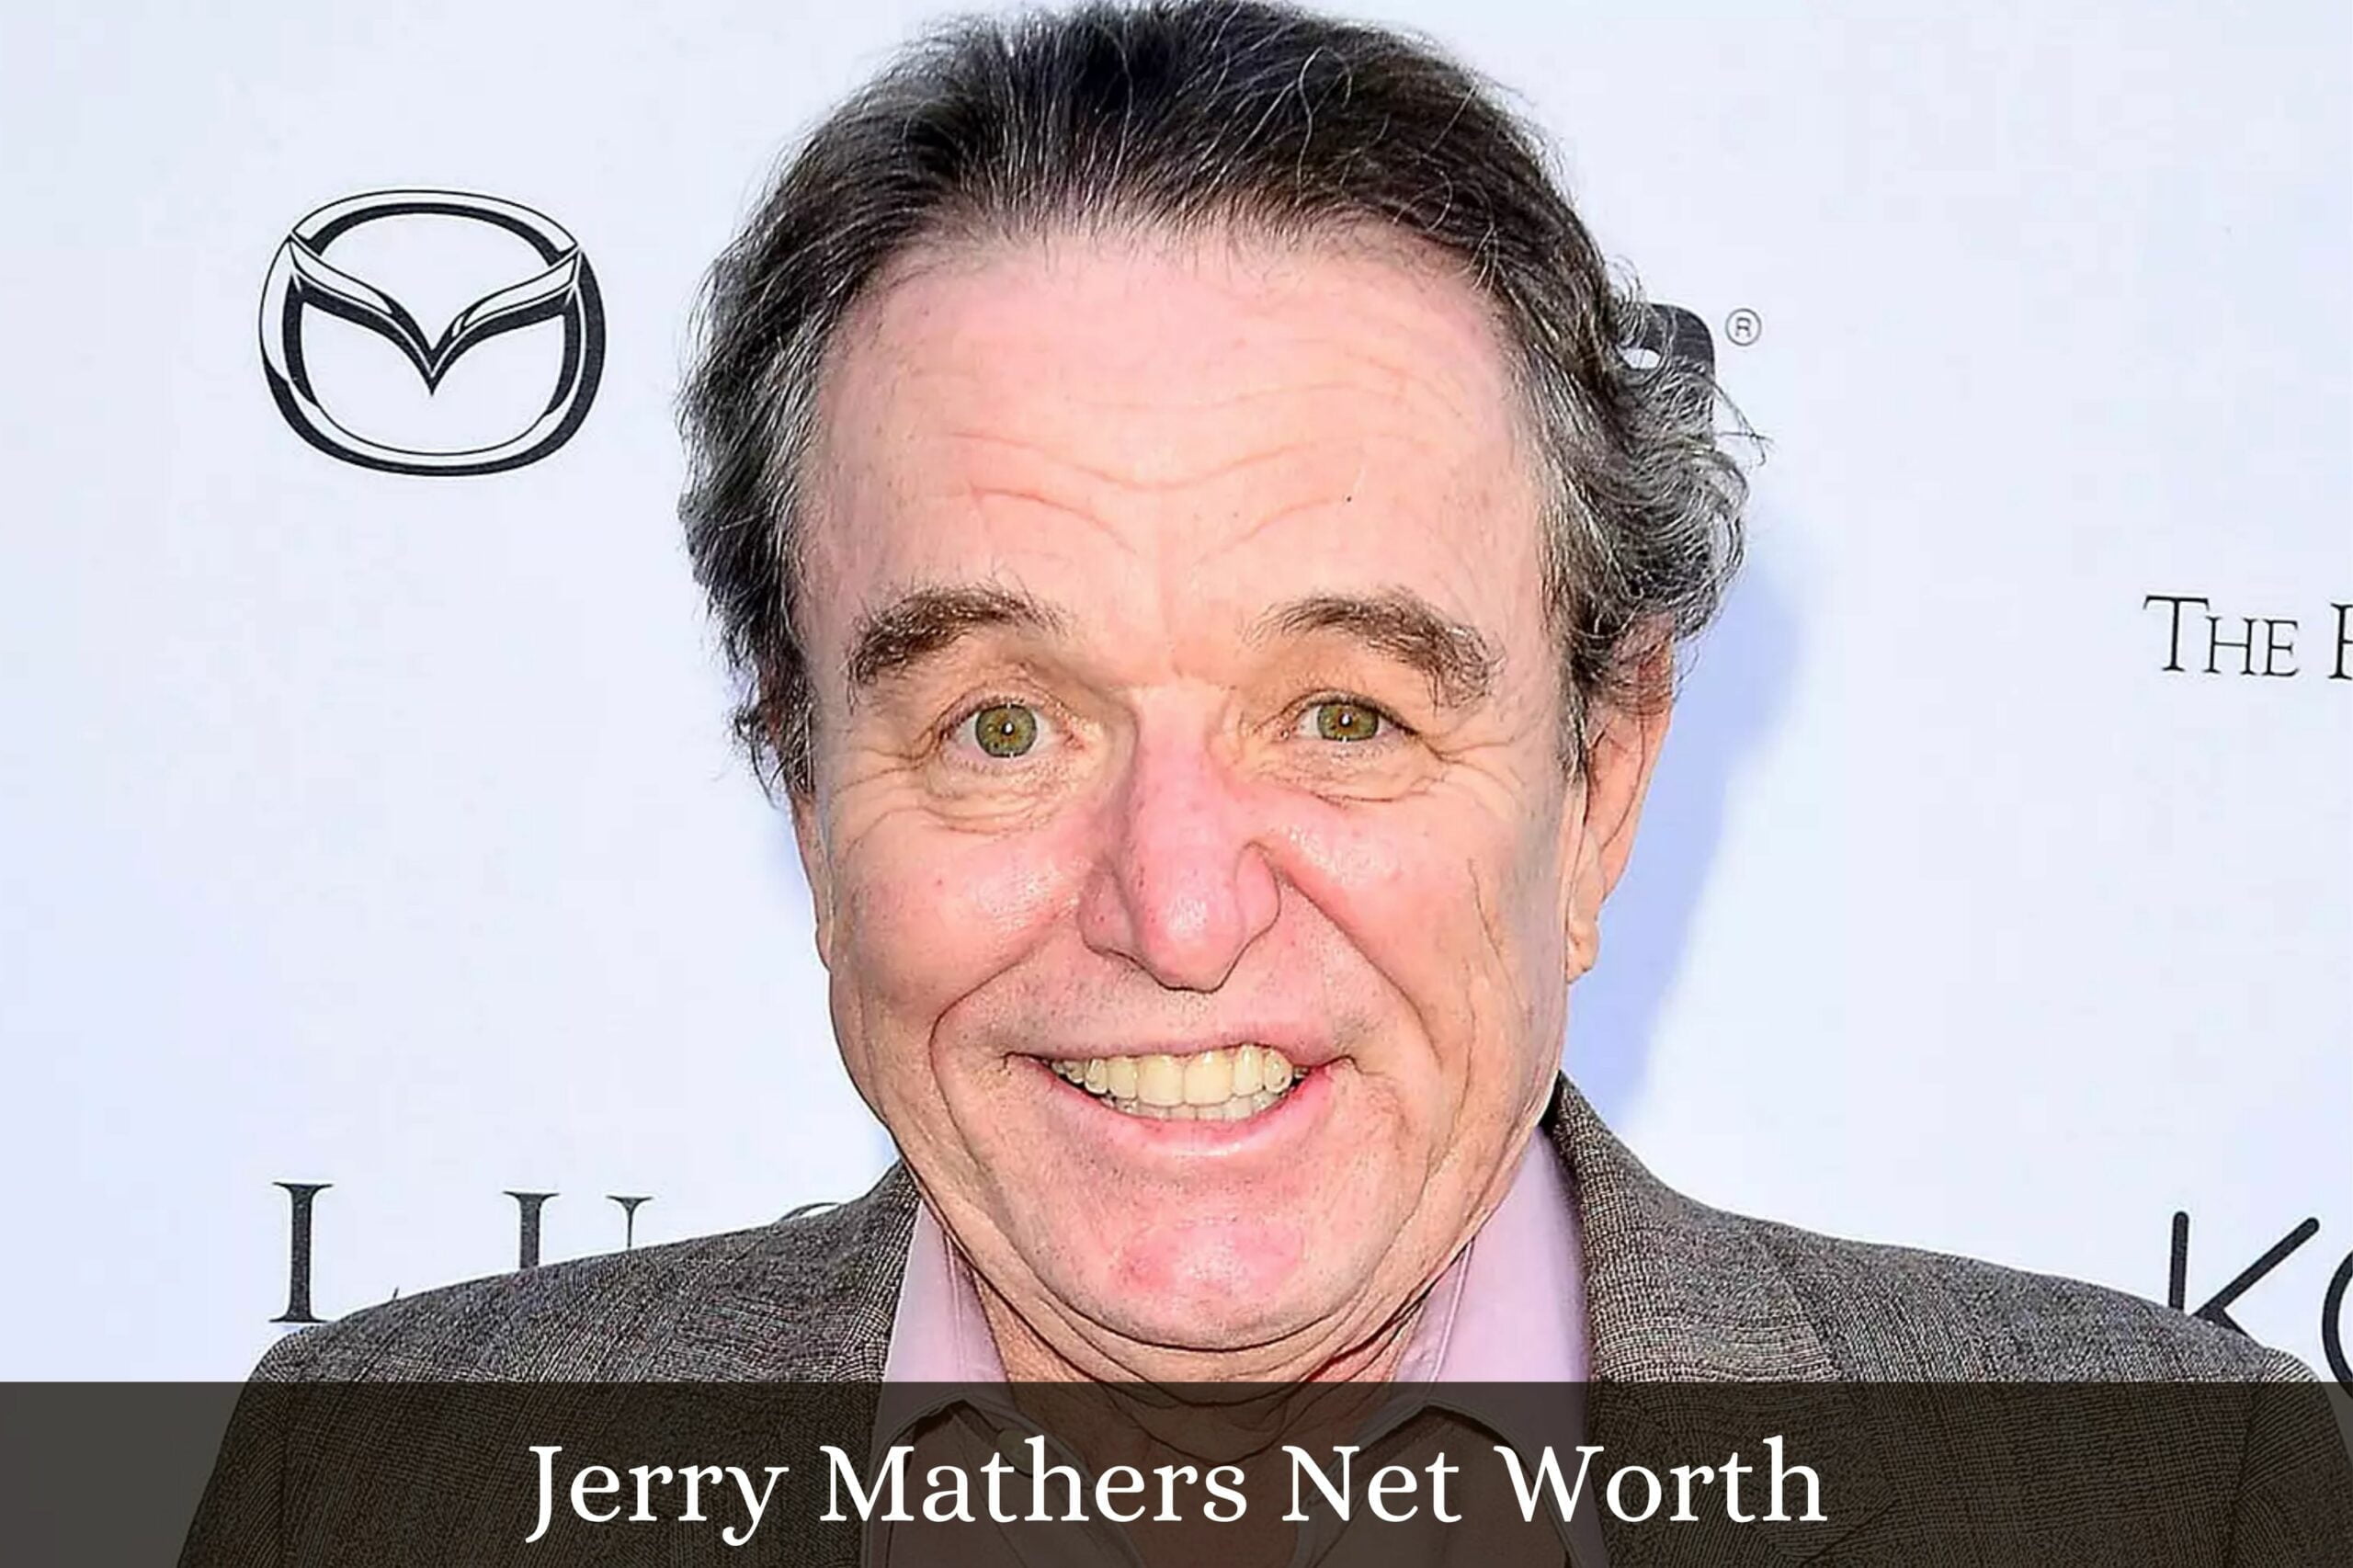 Jerry Mathers Net Worth scaled